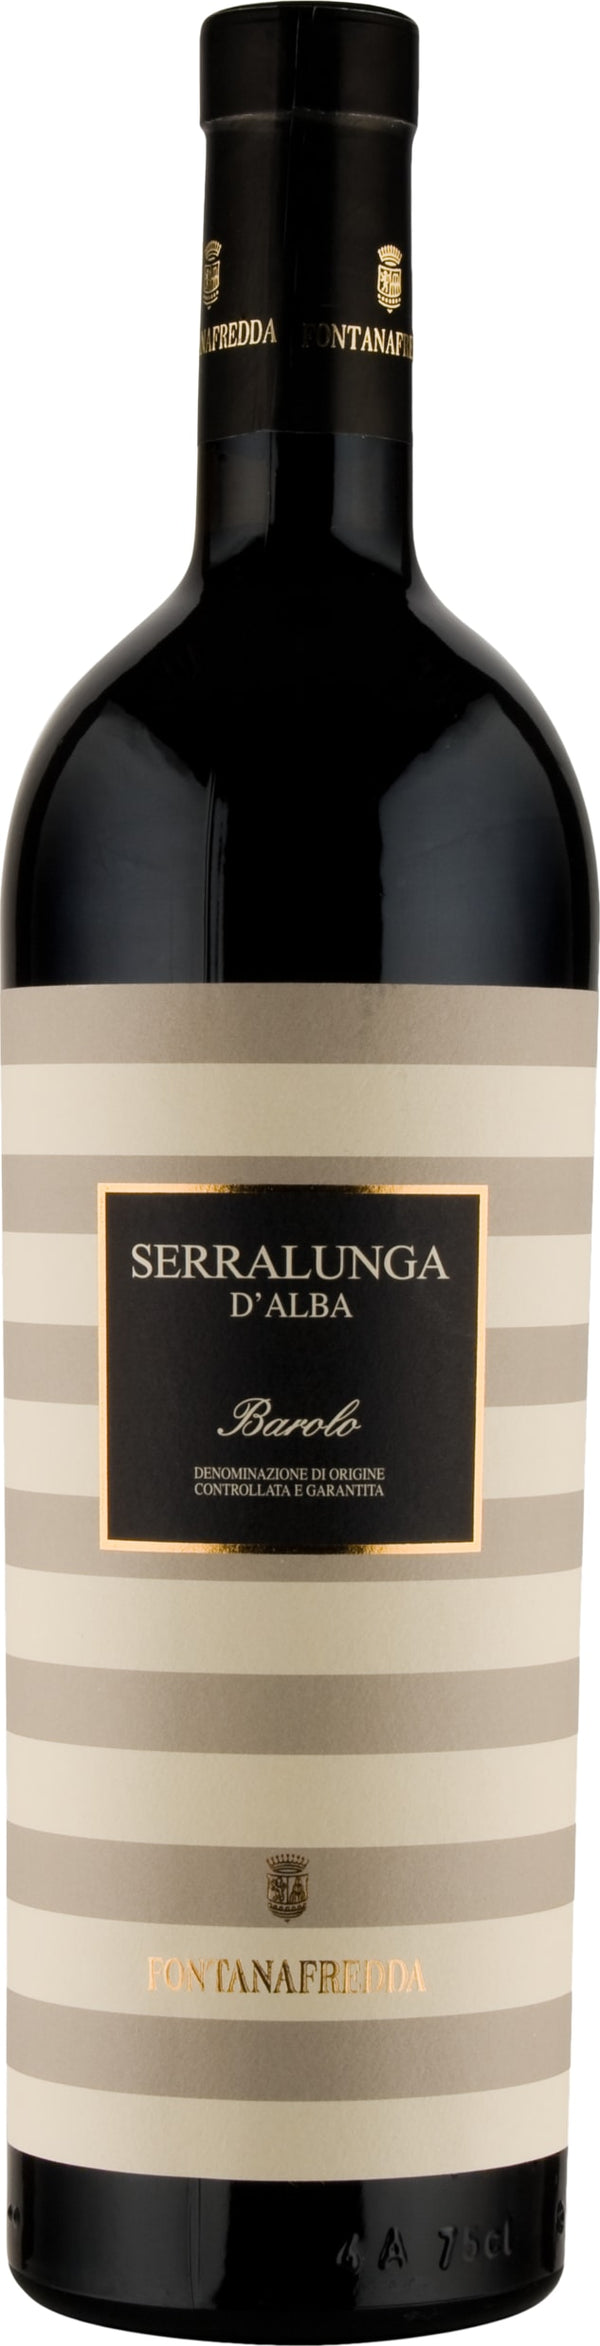 Fontanafredda Barolo di Serralunga dAlba DOCG 2019 6x75cl - Just Wines 